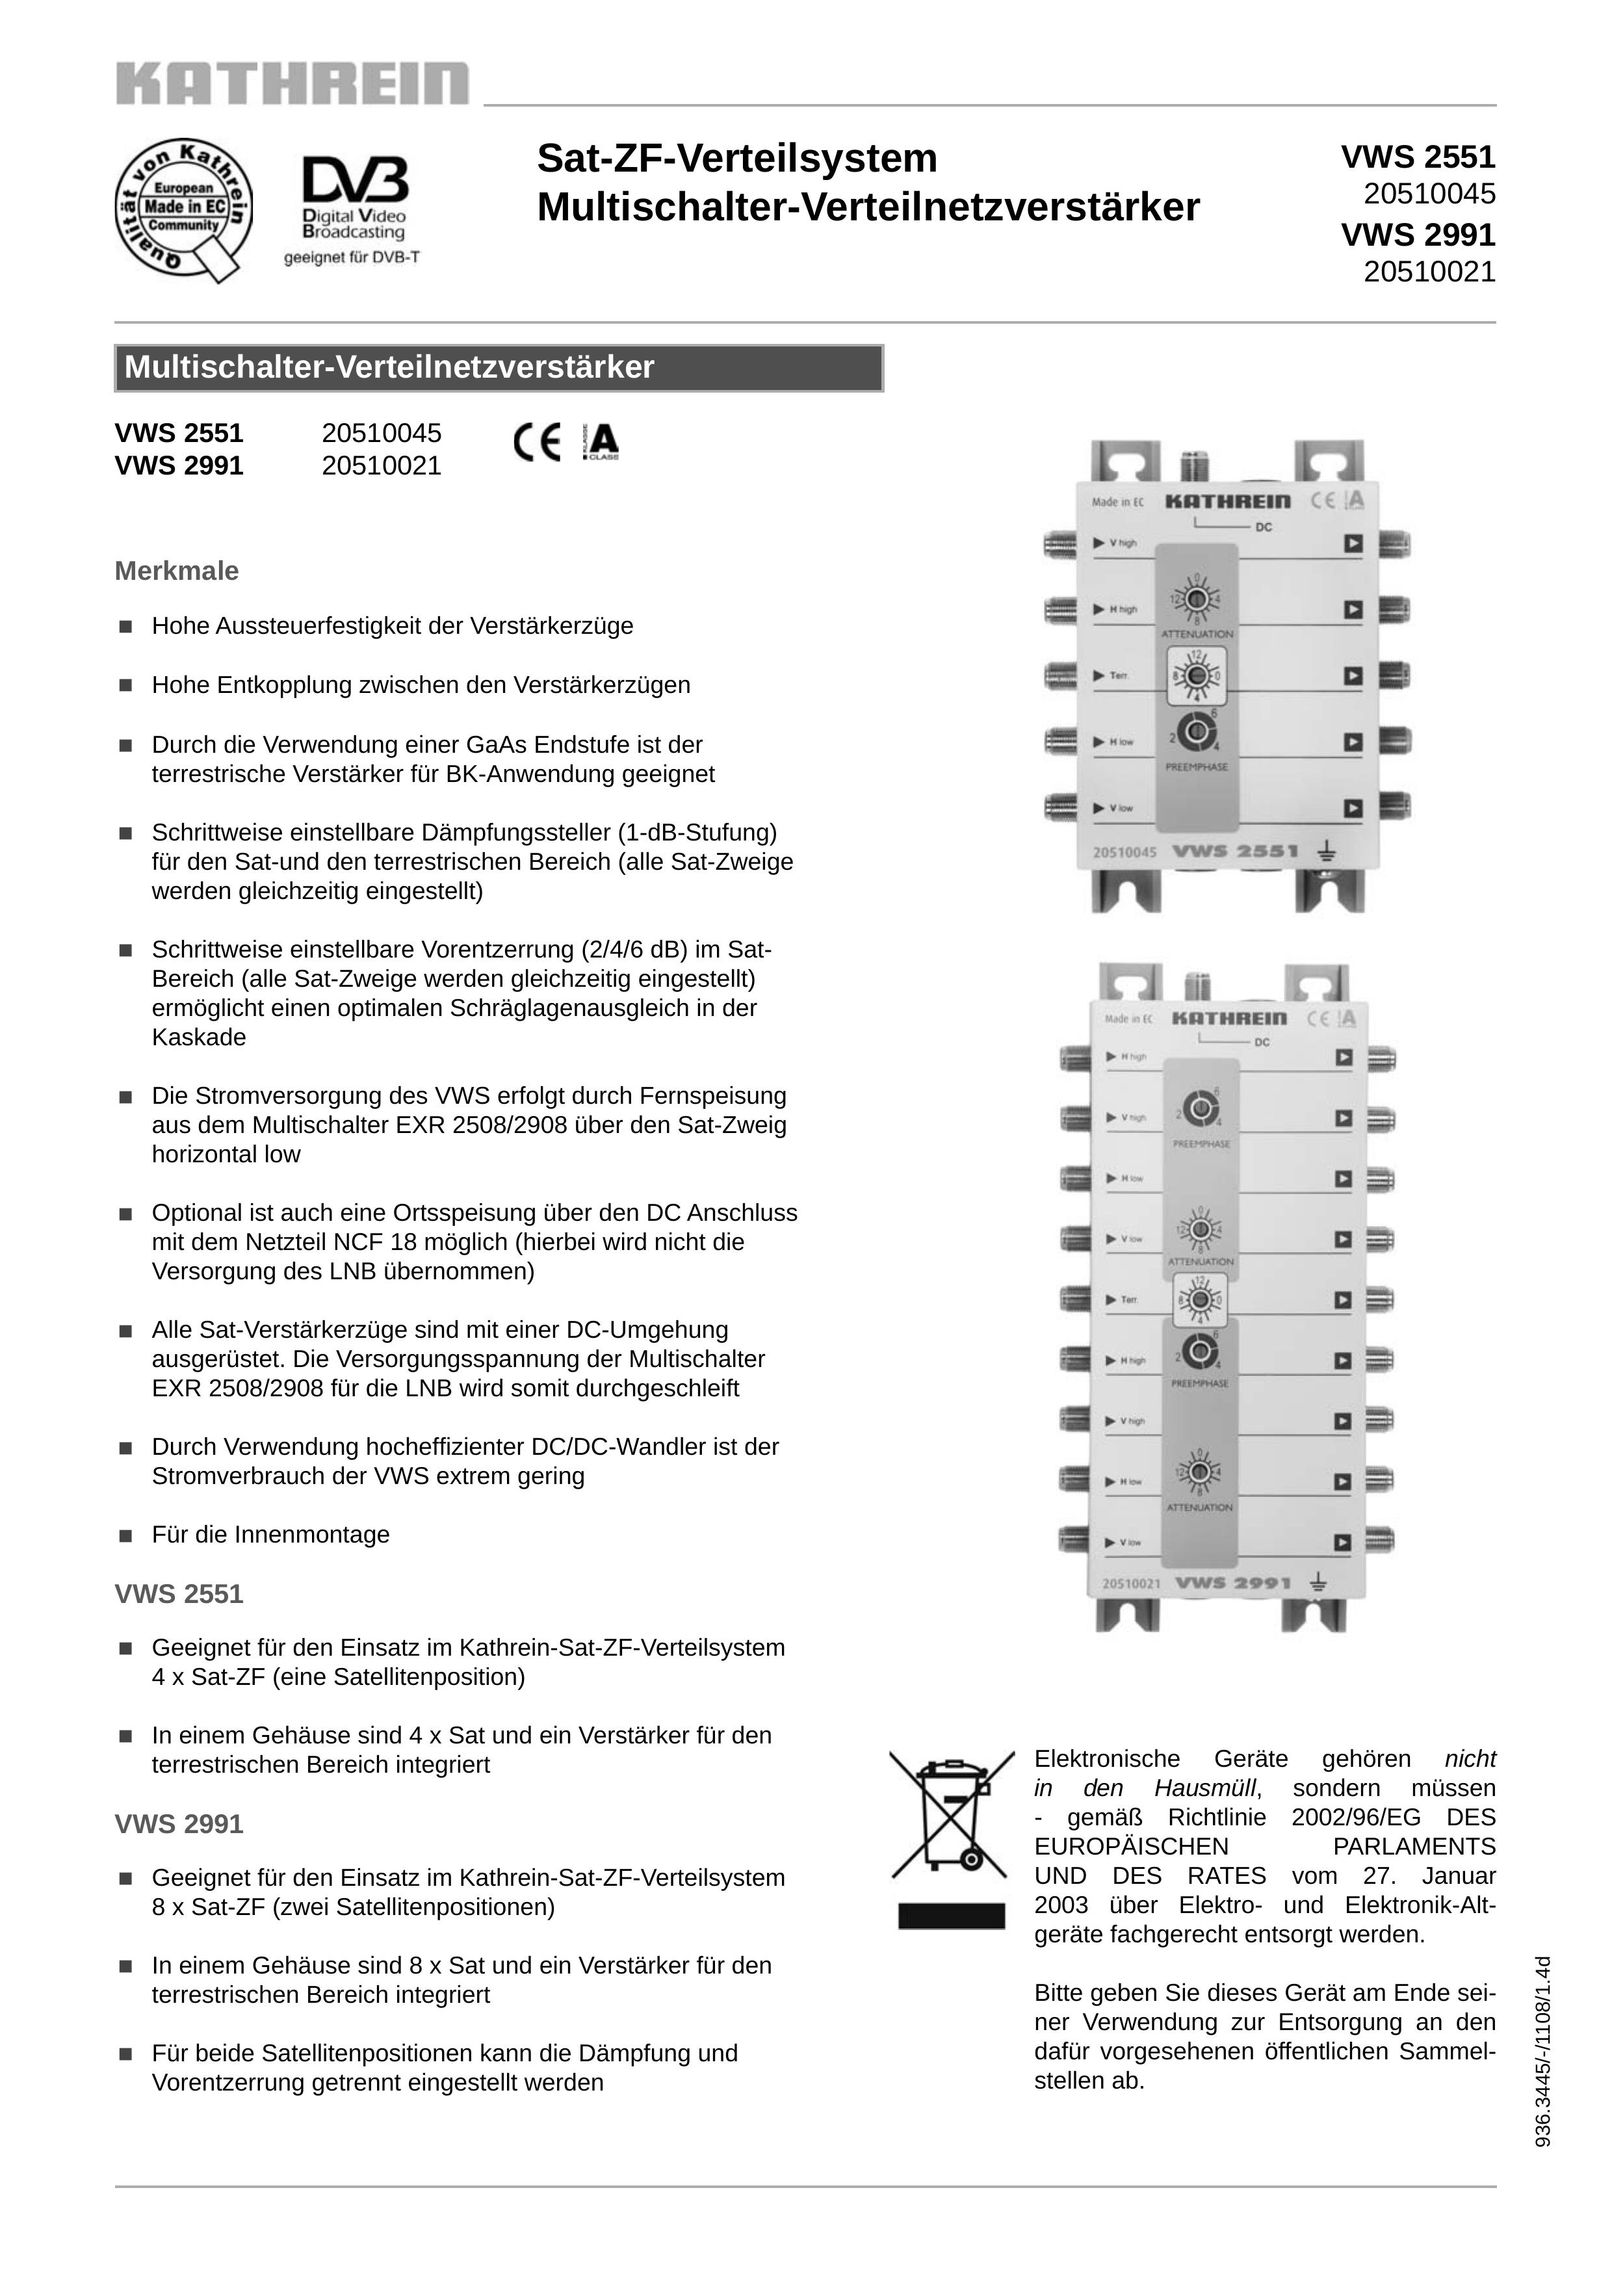 Kathrein VWS2991 Car Amplifier User Manual